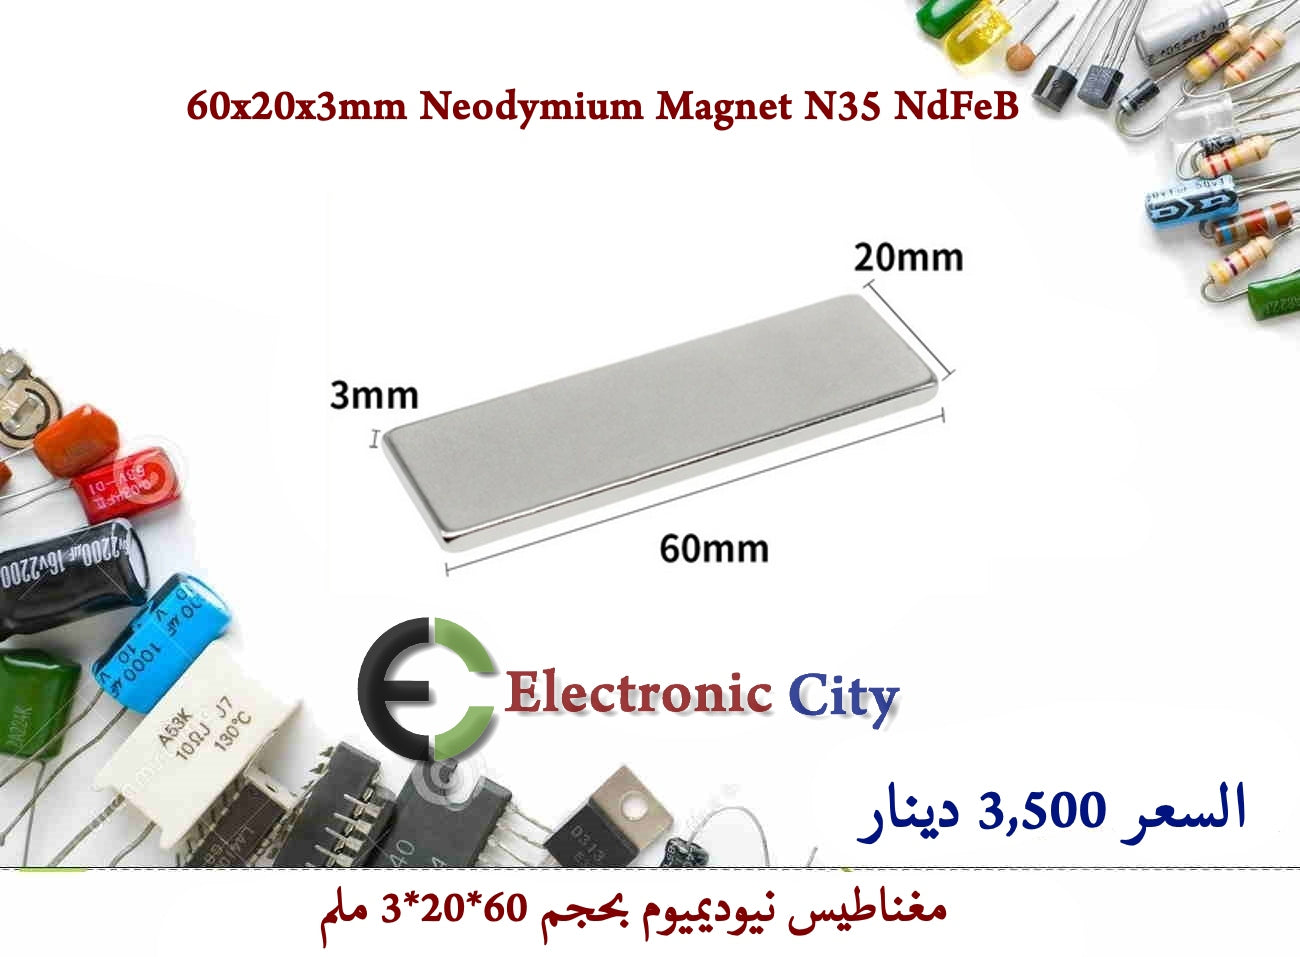 60x20x3mm Neodymium Magnet N35 NdFeB